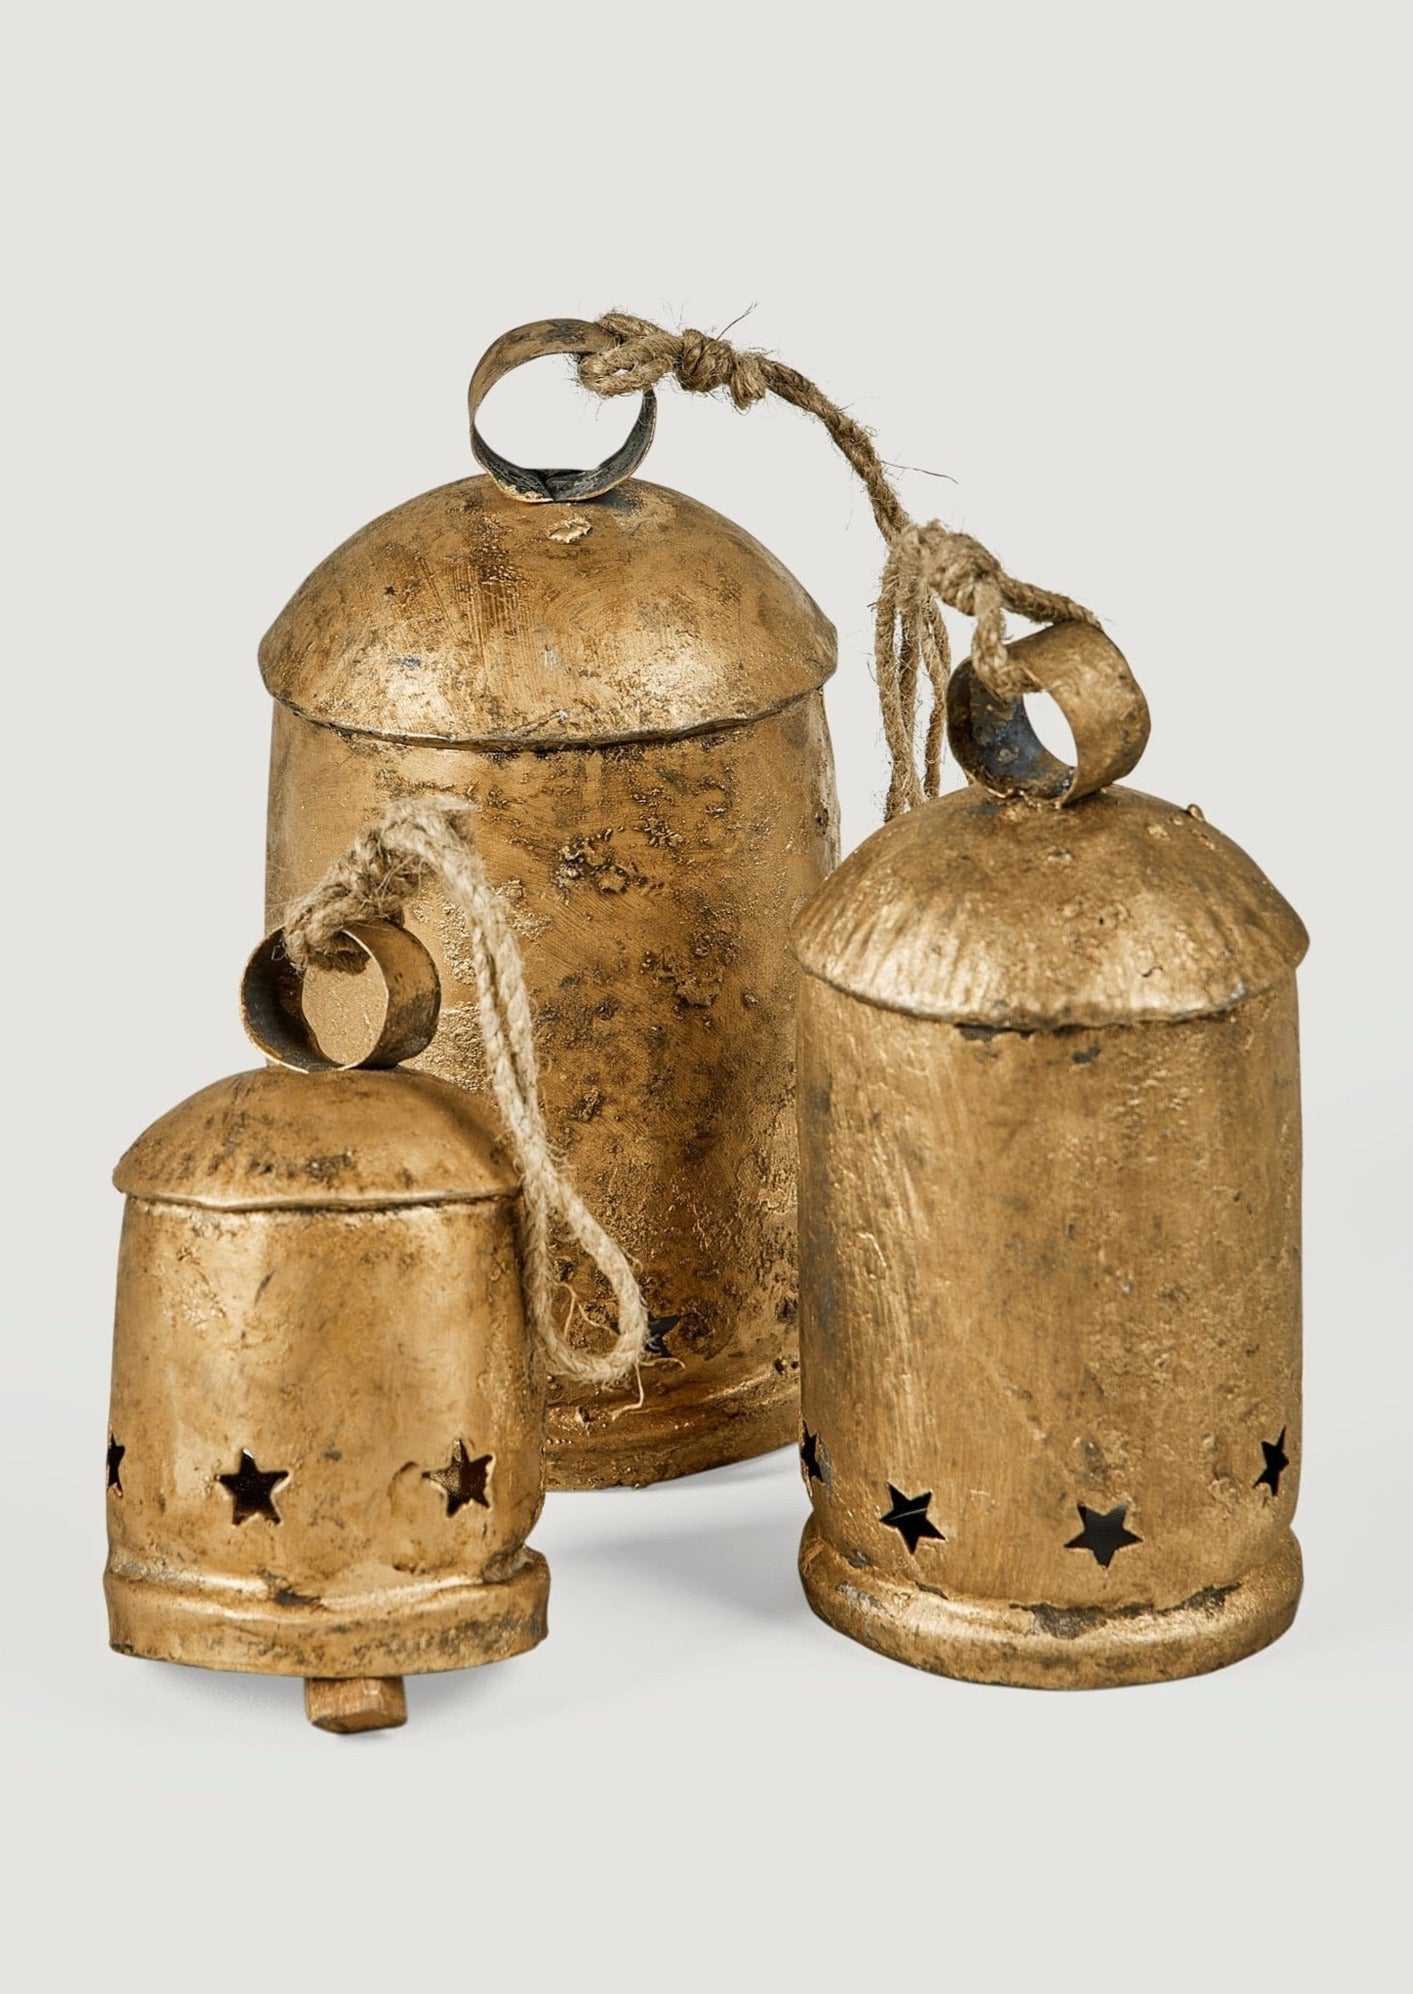 Antique Gold Metal Bells, Holiday Decor